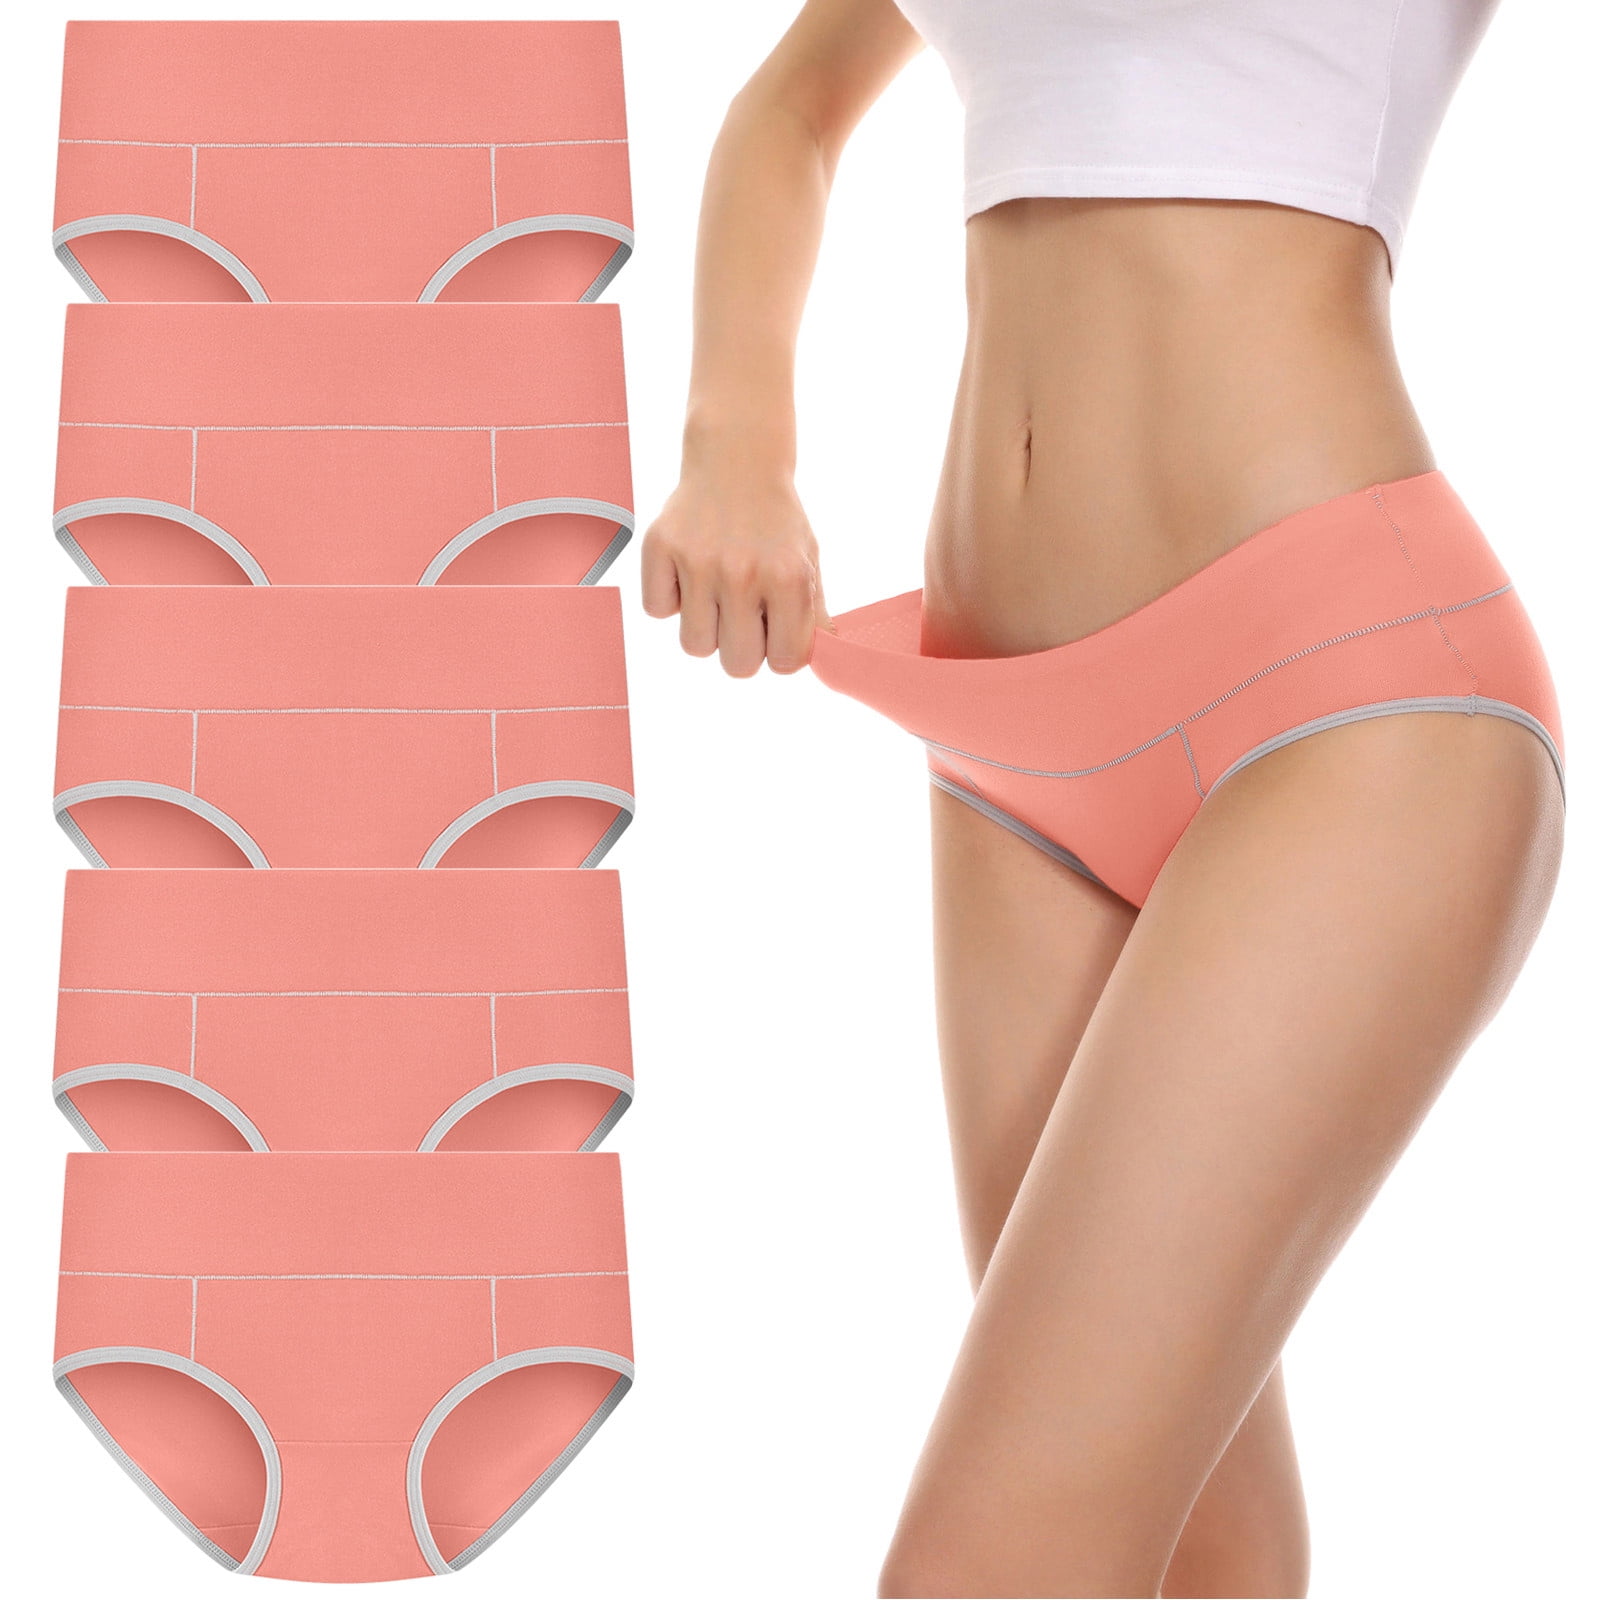 adviicd Thinx Period Panties for Teens Underwear Seamless Cotton